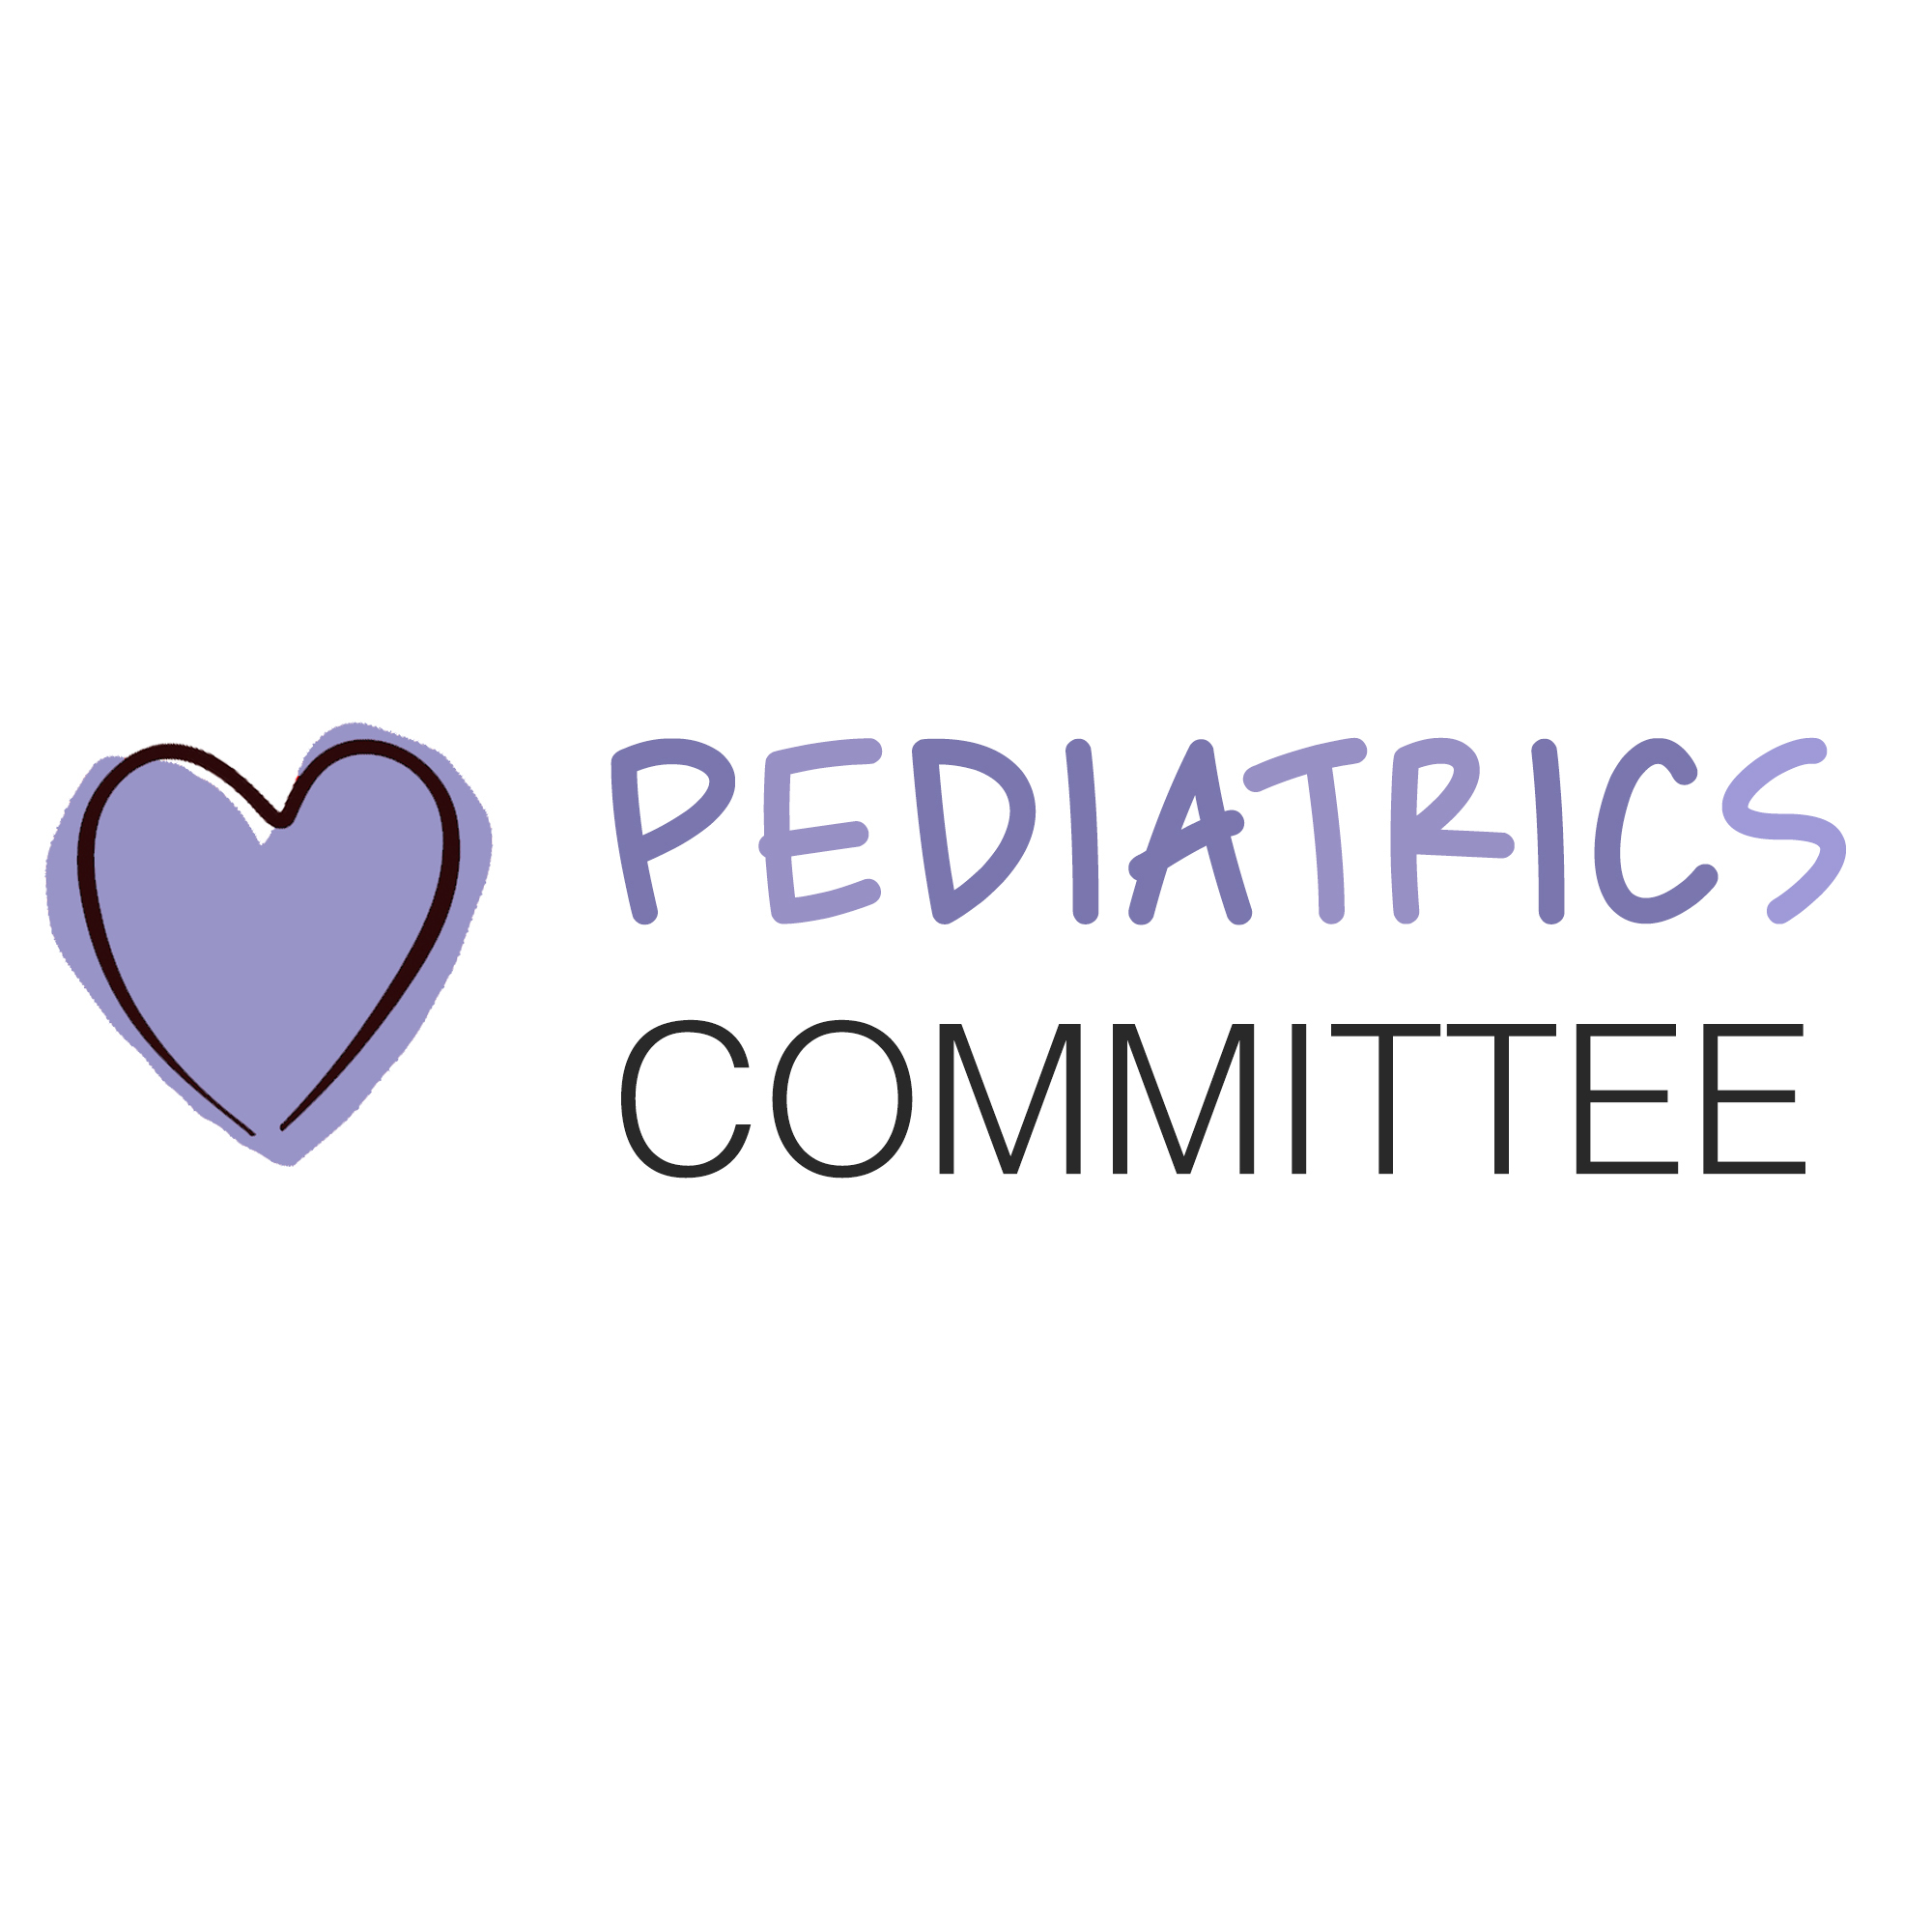 Image of Pediatrics Committee